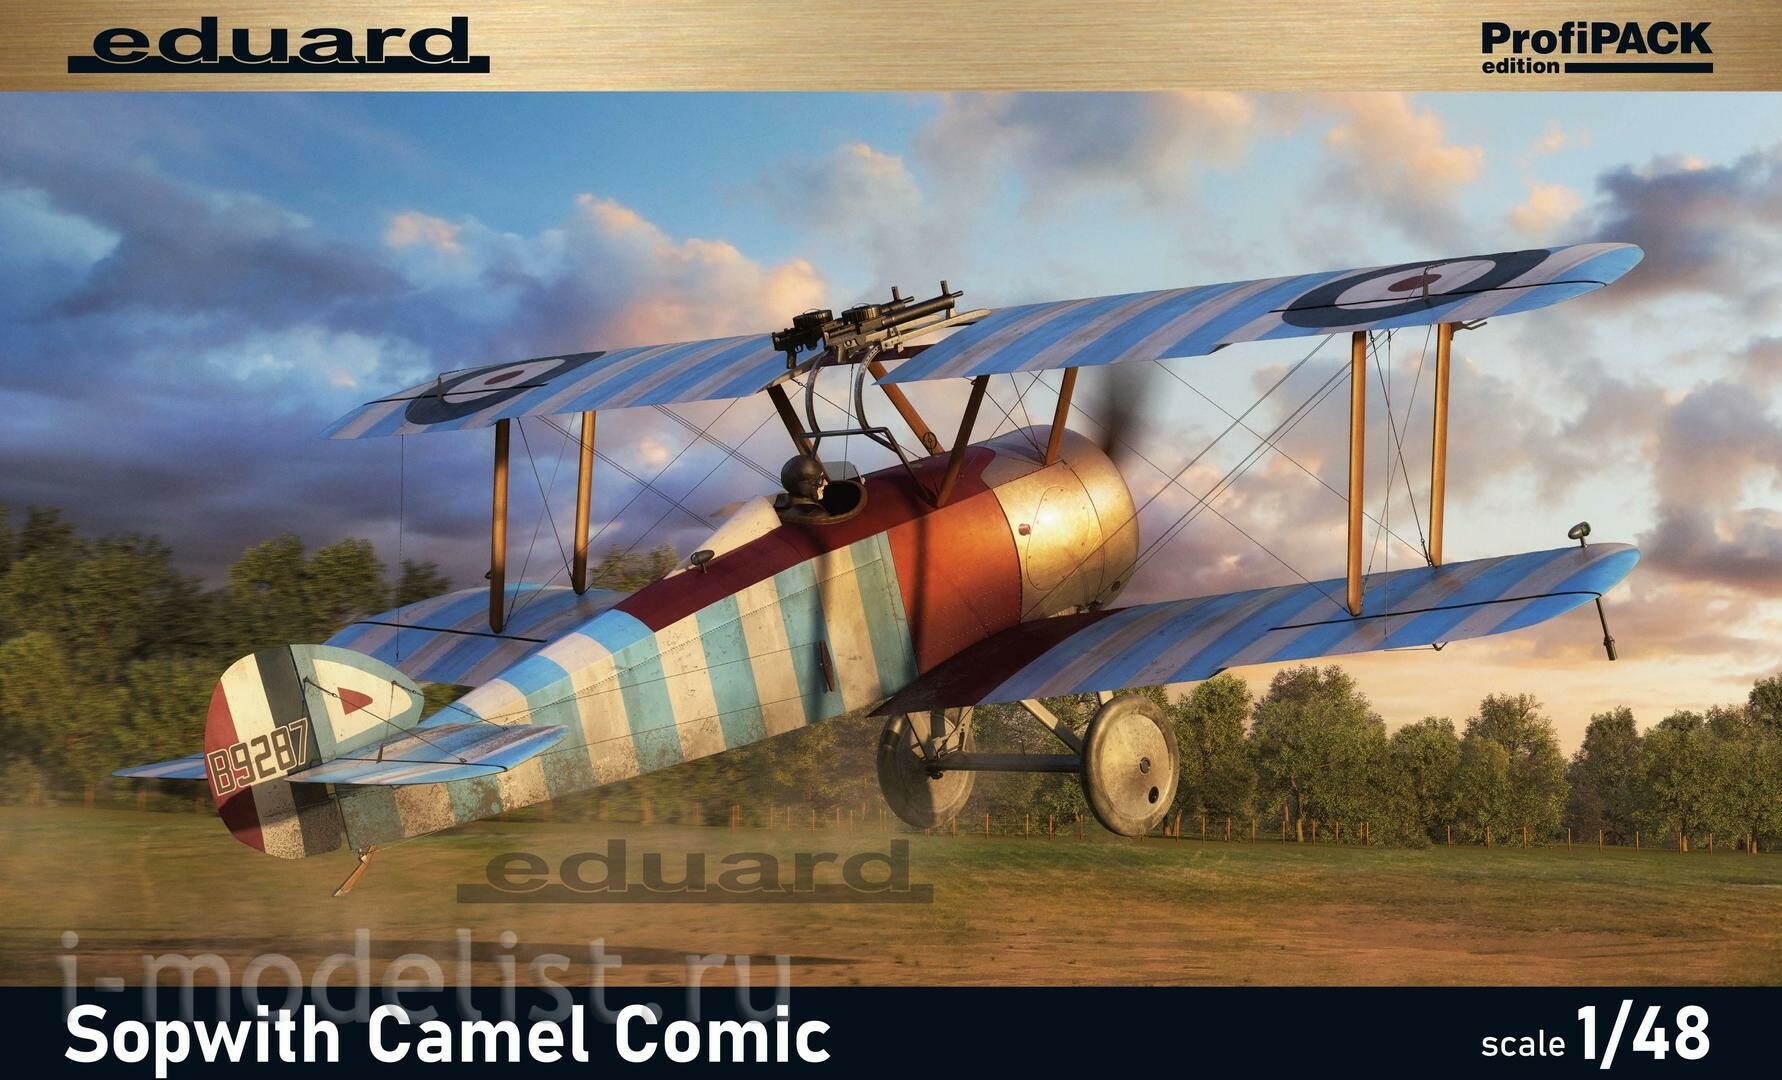 82175 Eduard 1/48 Истребитель Sopwith Camel Comic версия ProfiPACK